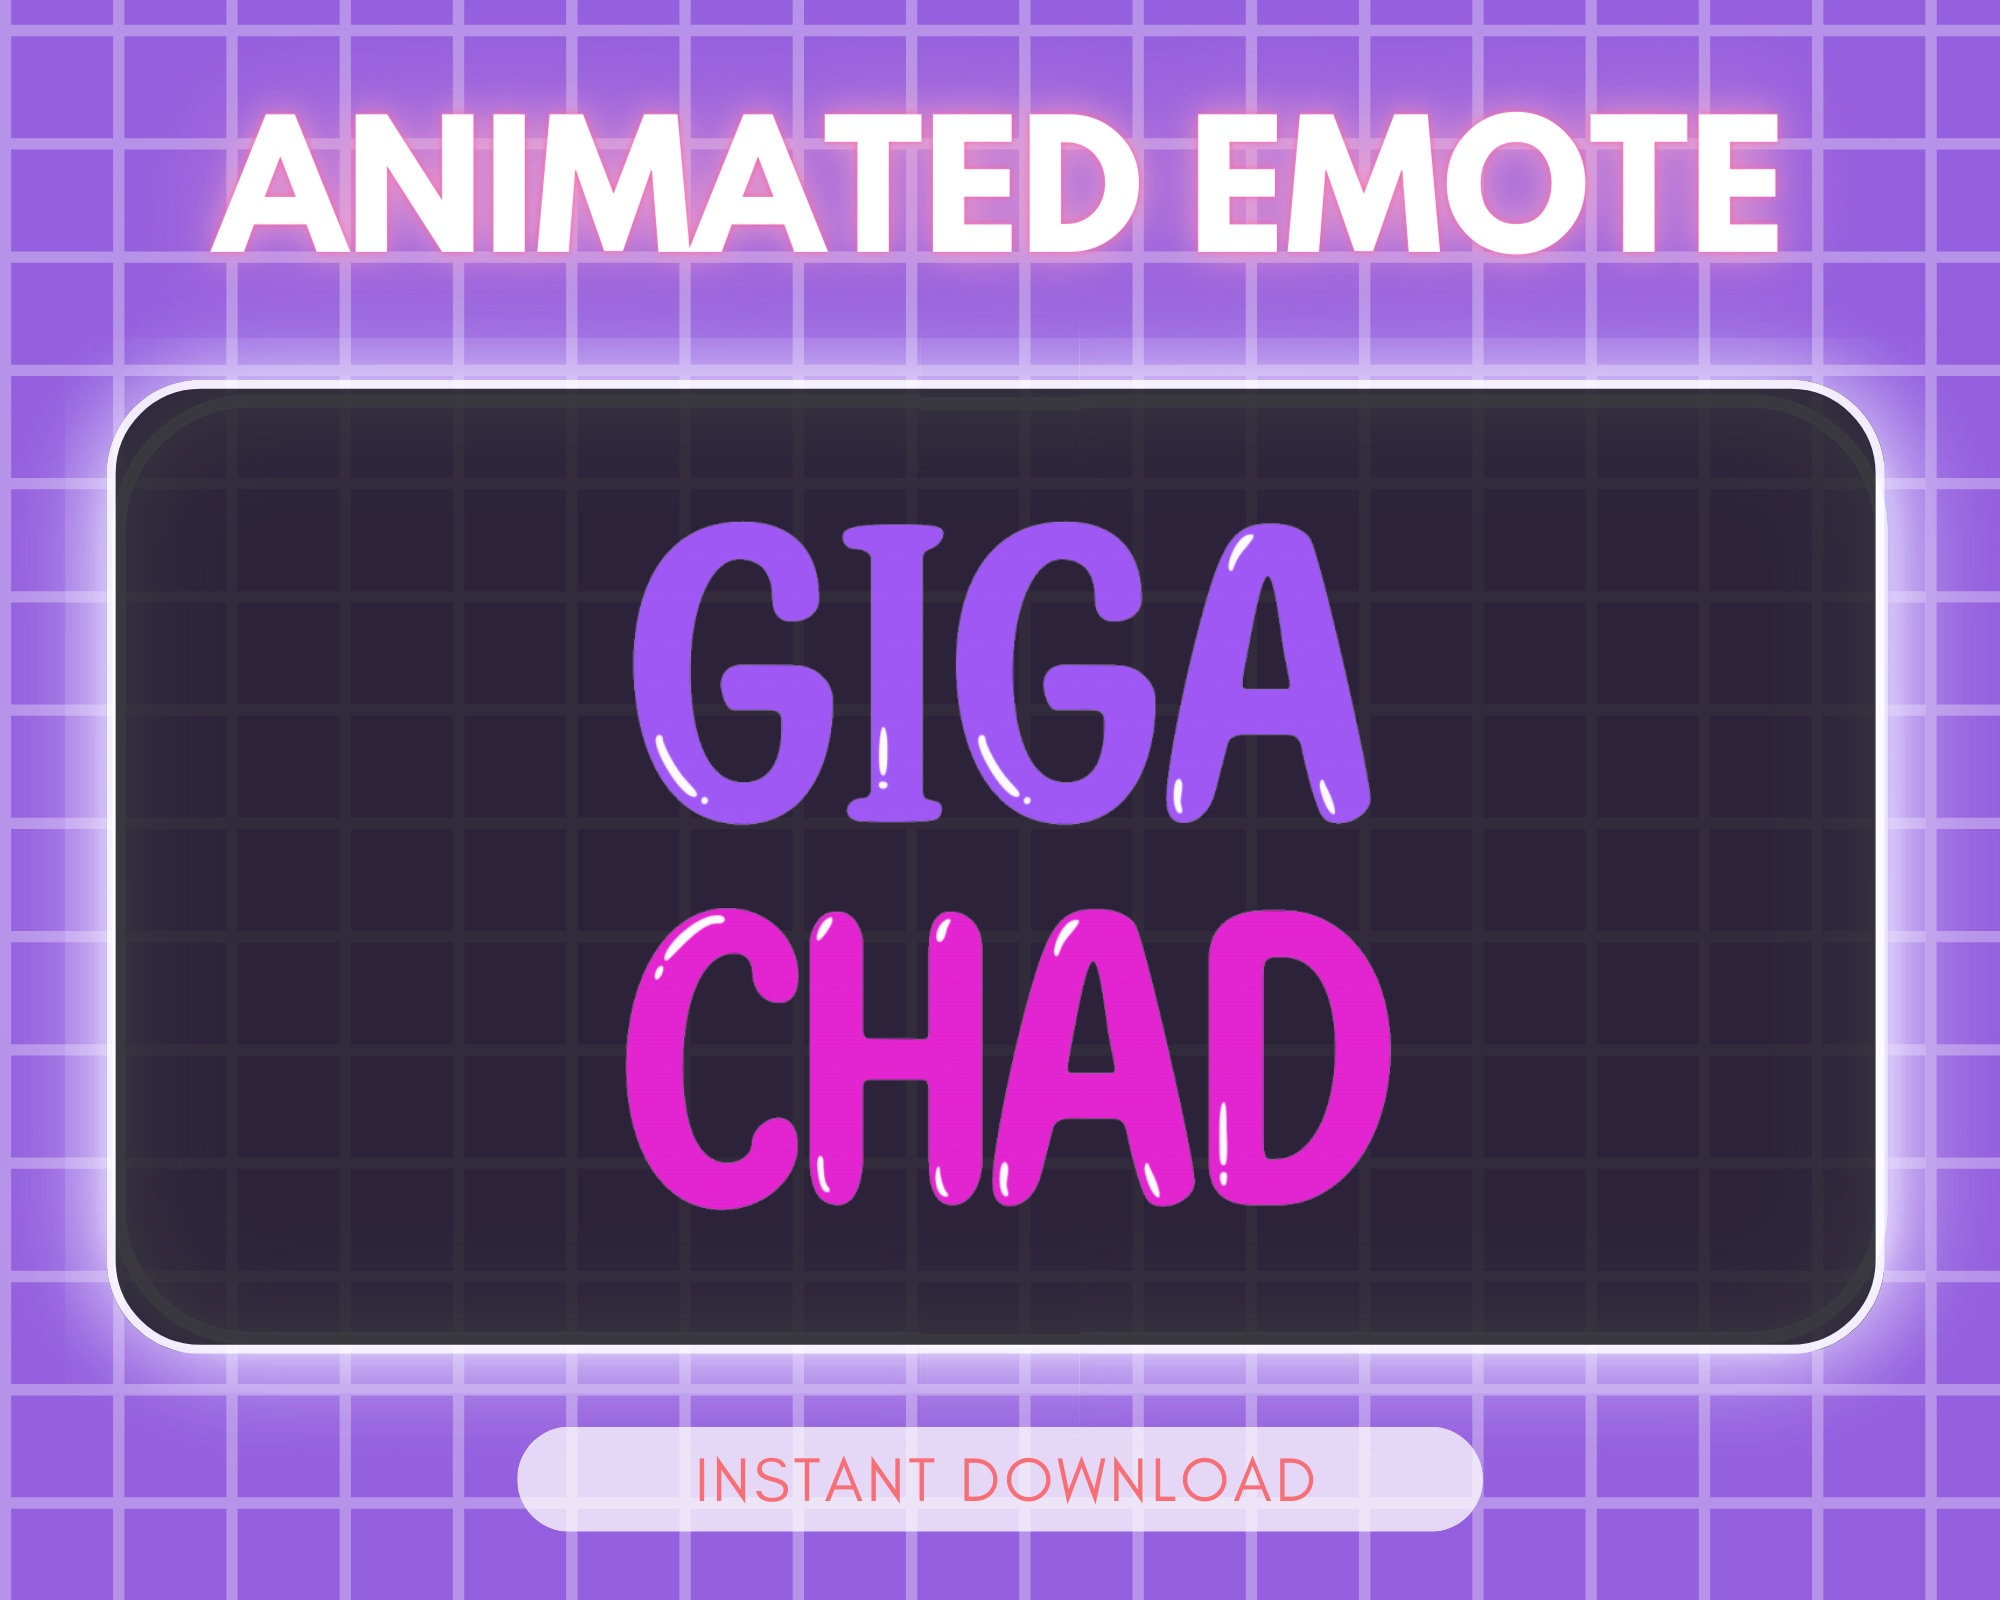 Twitch Emote / Giga Brimstone / Giga Chad Meme / Funny Meme / Chibi / Cute  / Emote for Streamer / Stream Emoji / Discord /